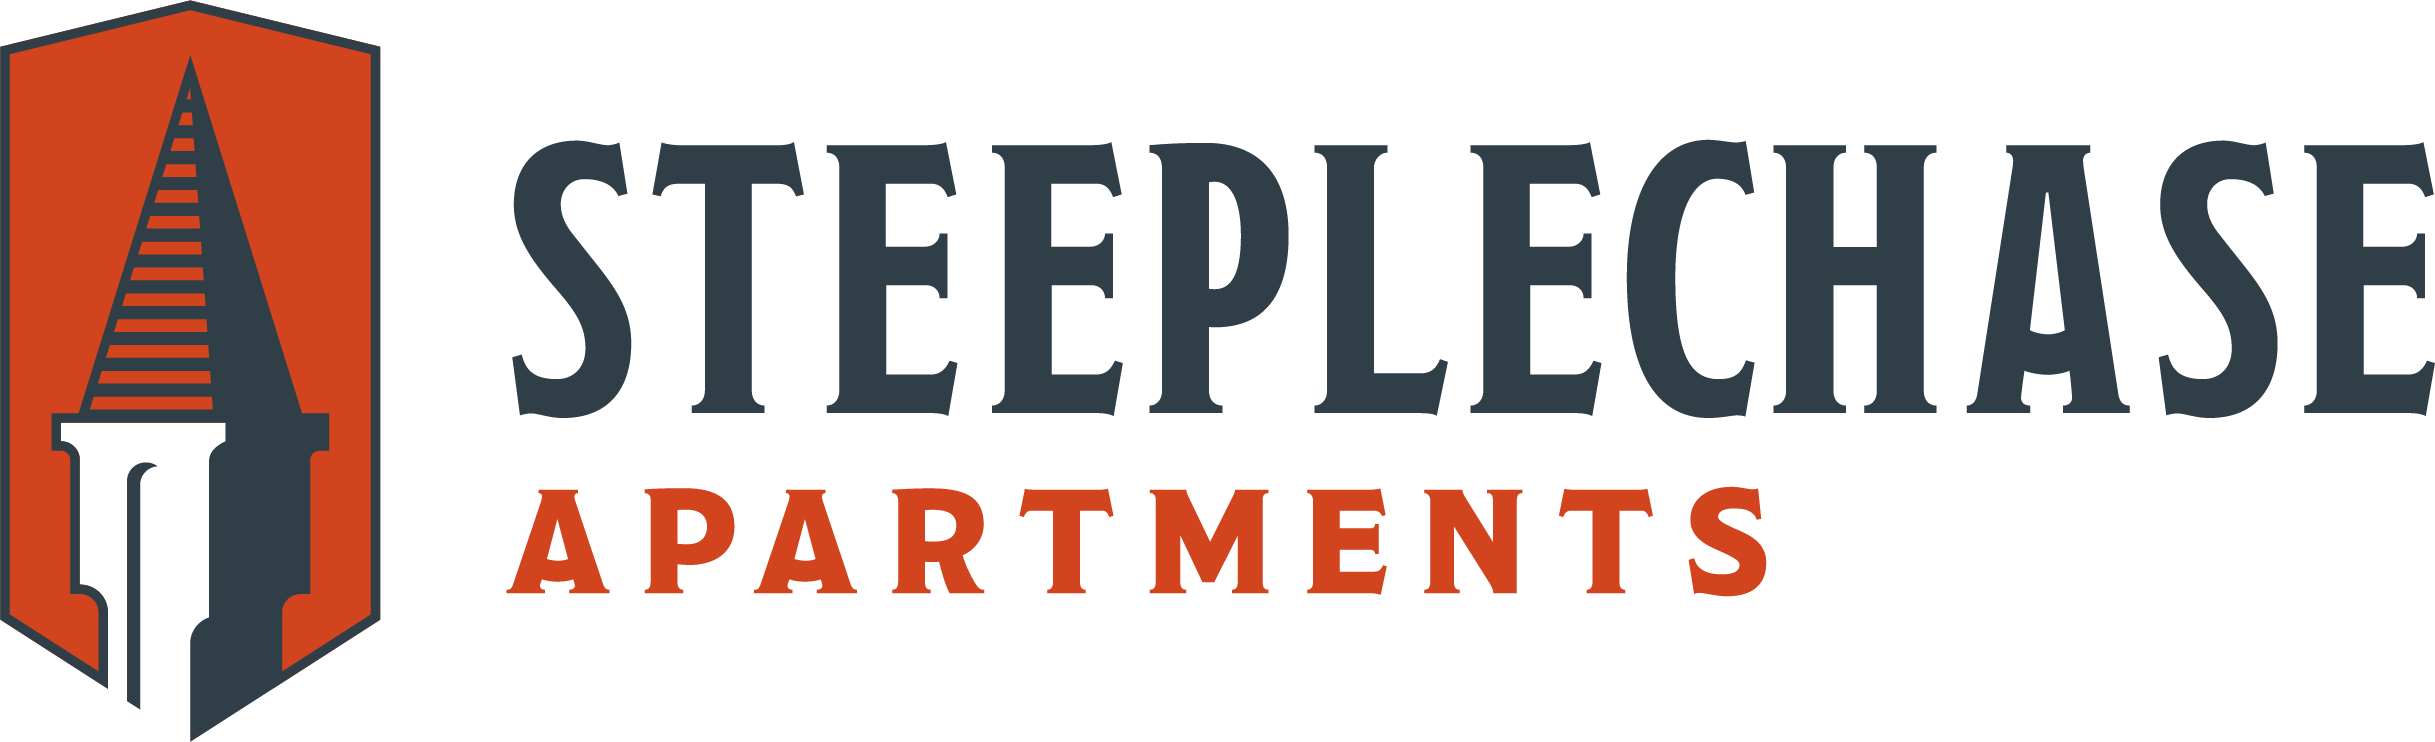 Regency - Steeplechase Apartments - Branding